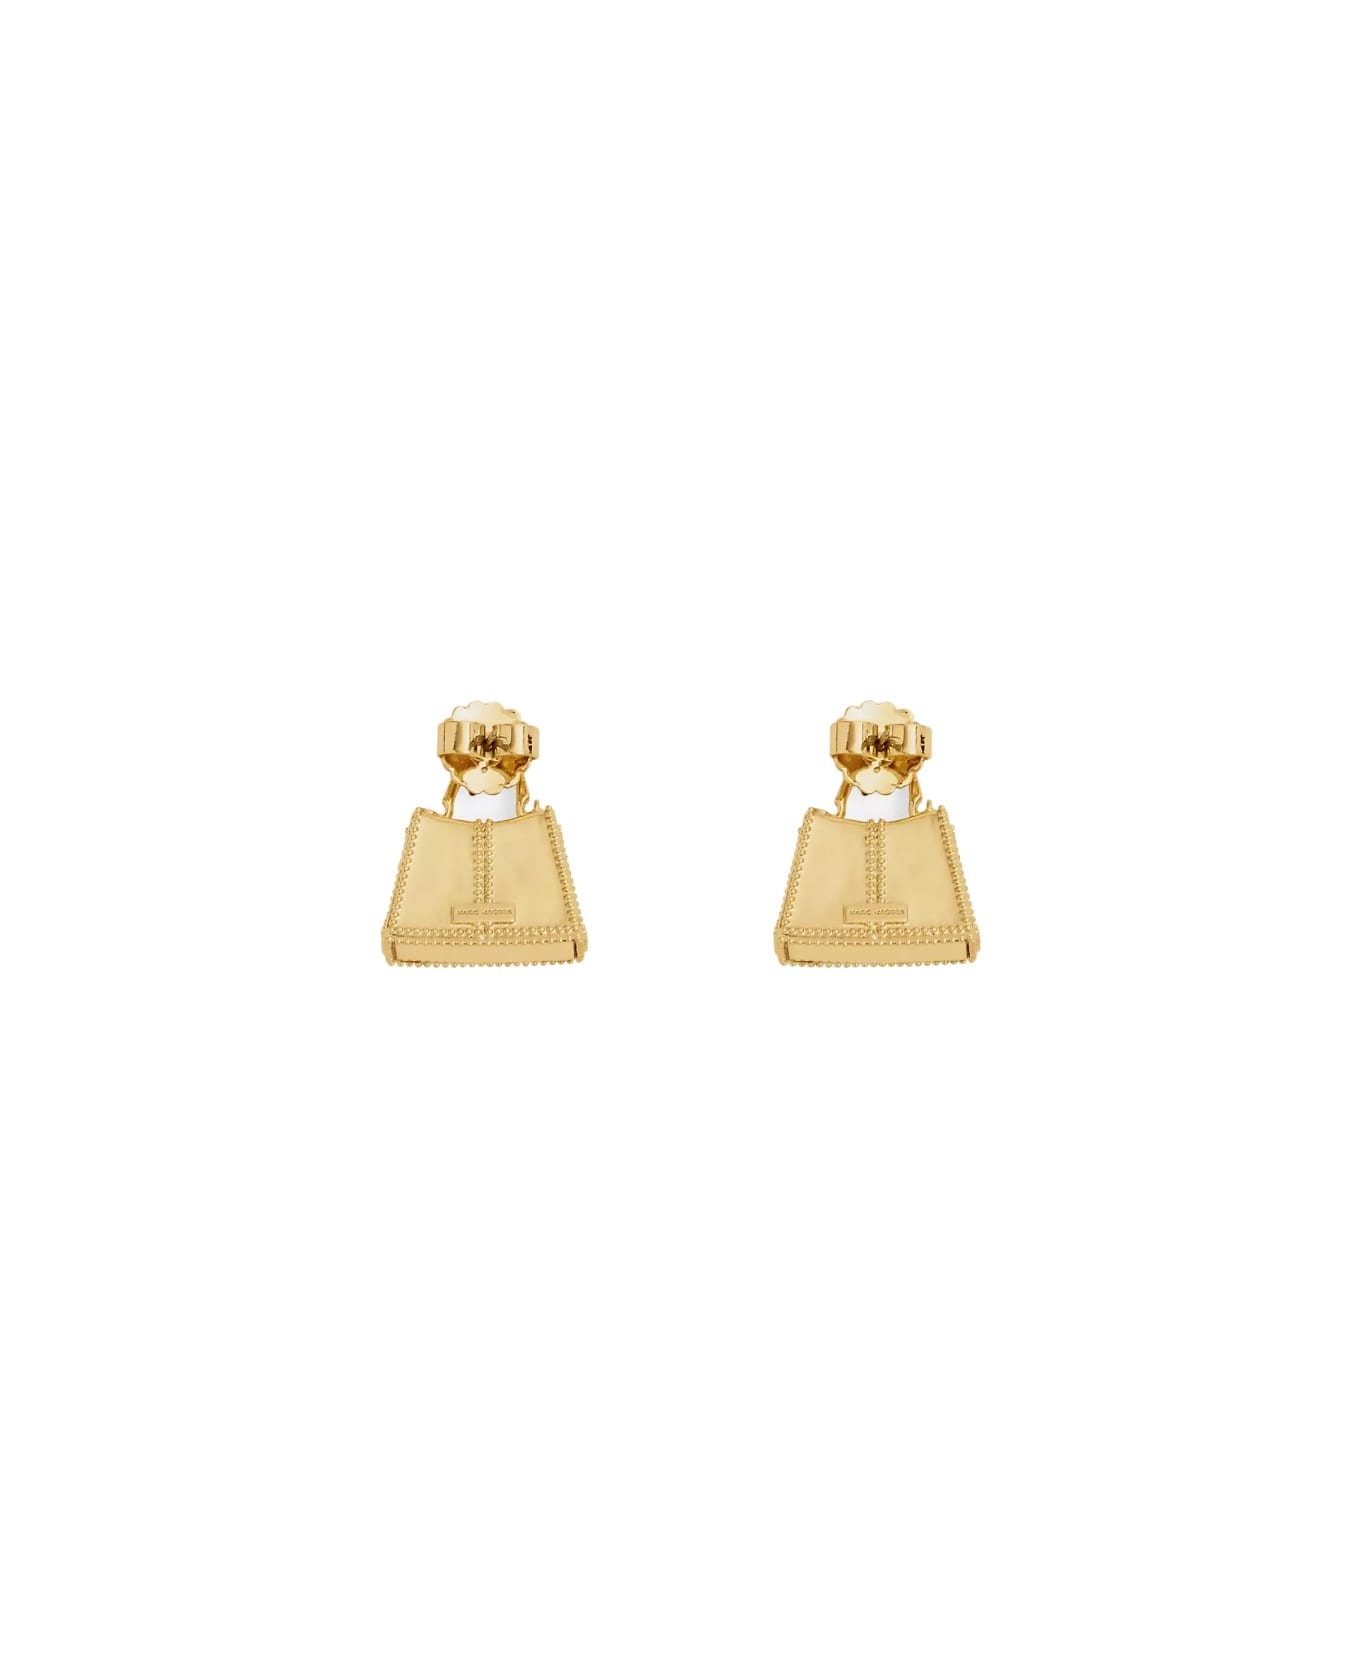 Marc Jacobs Earrings "st. Marc" - GOLD